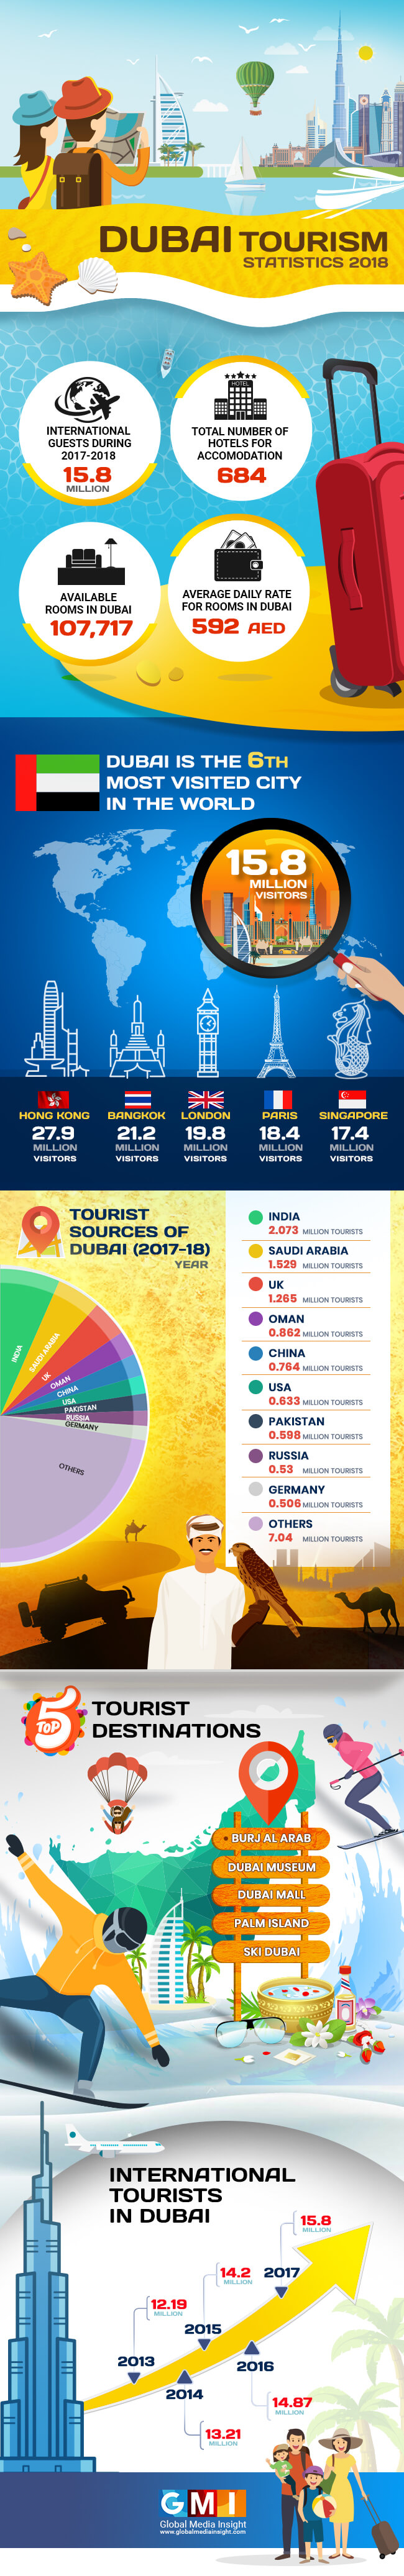 dubai tourism statistics